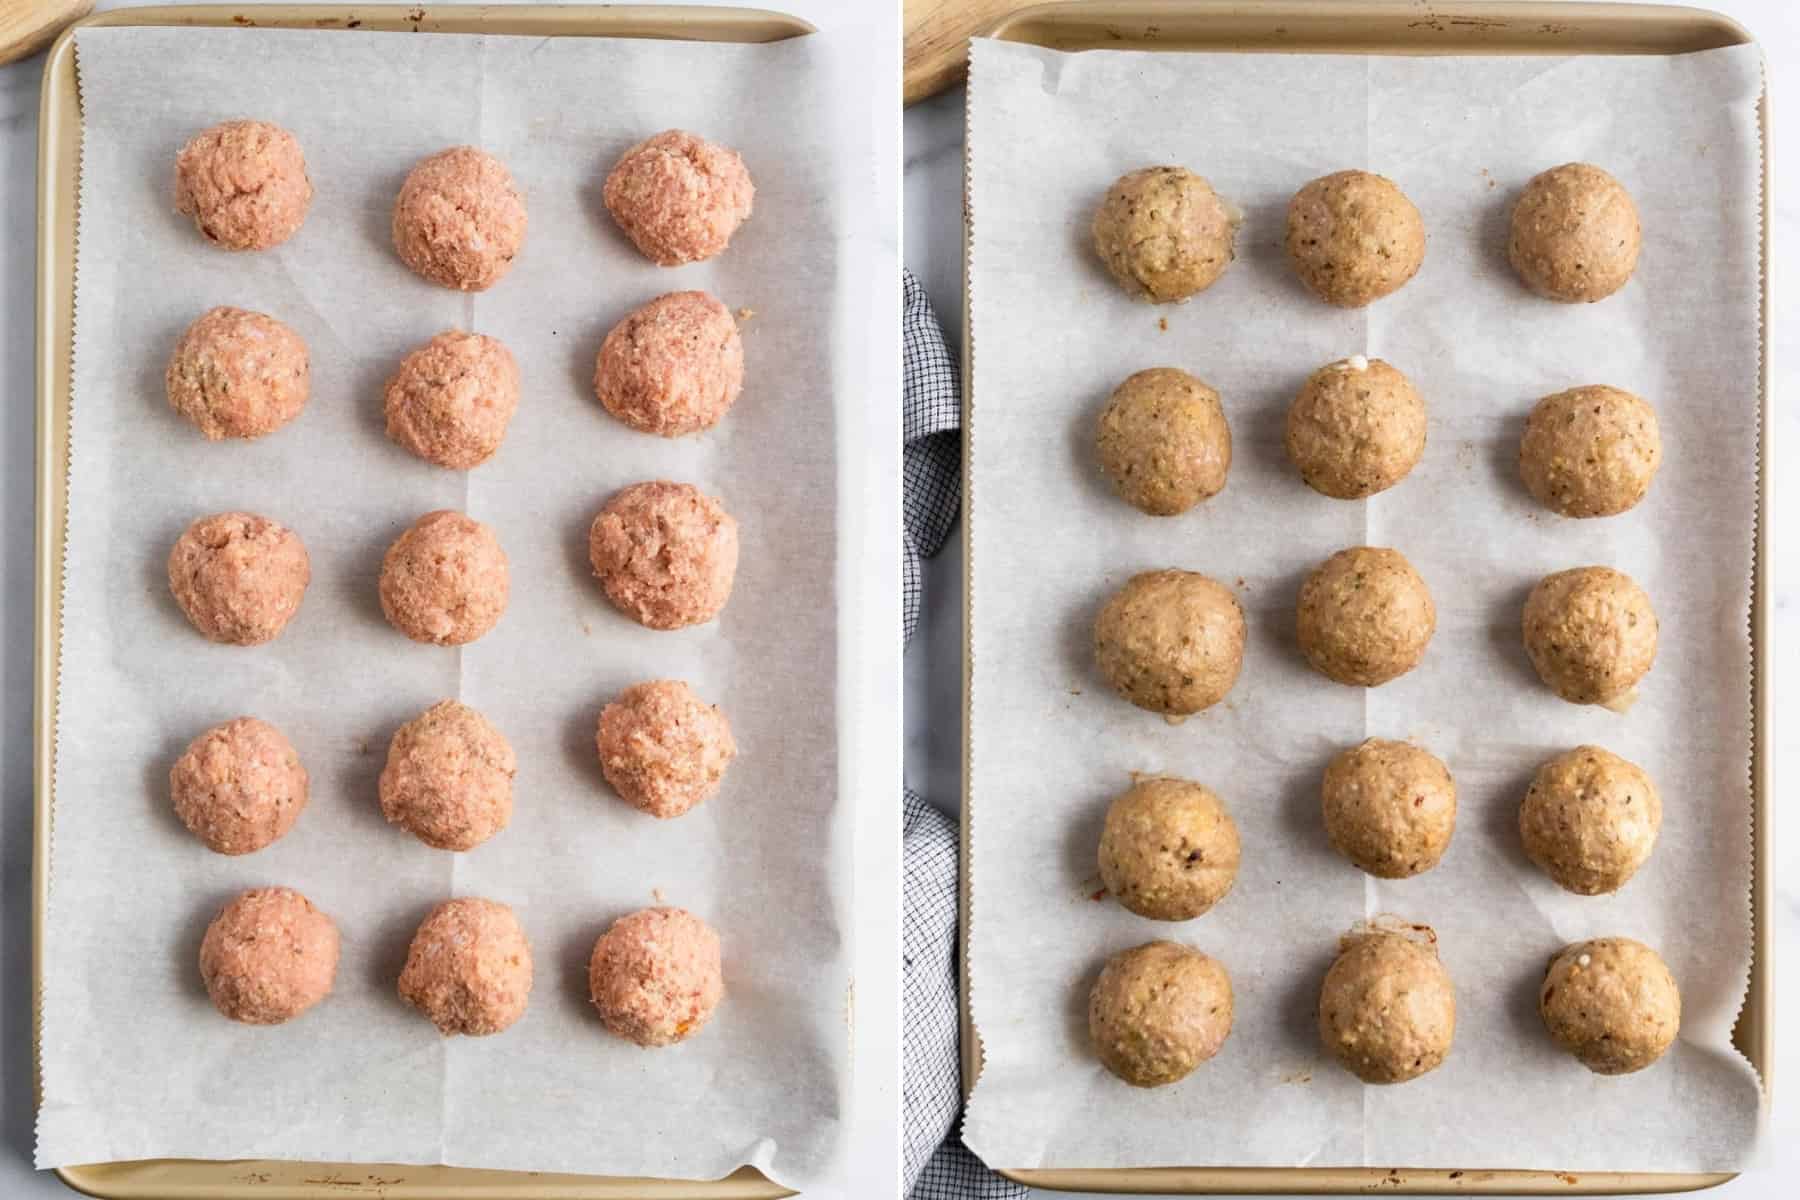 Meatballs lined on baking sheet.